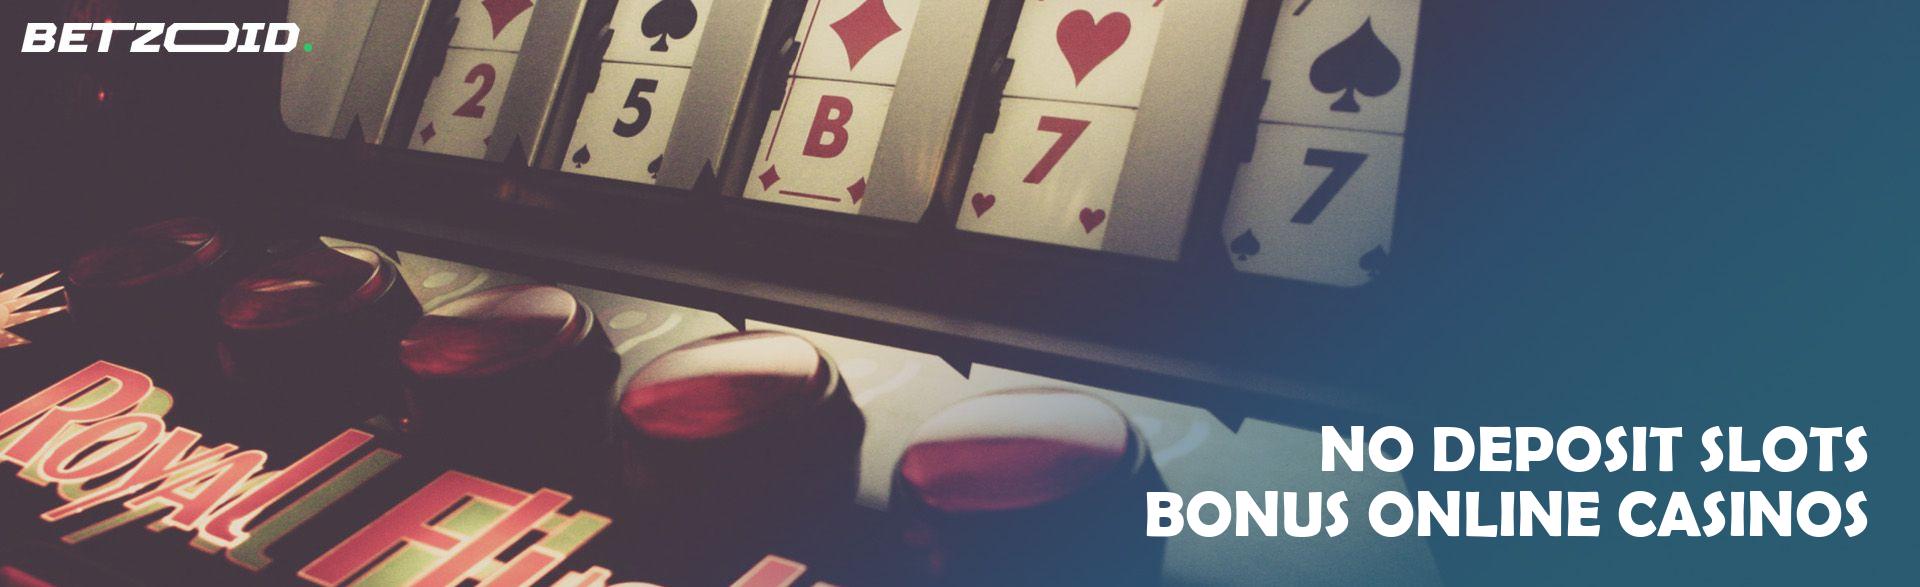 No Deposit Slots Bonus Online Casinos.